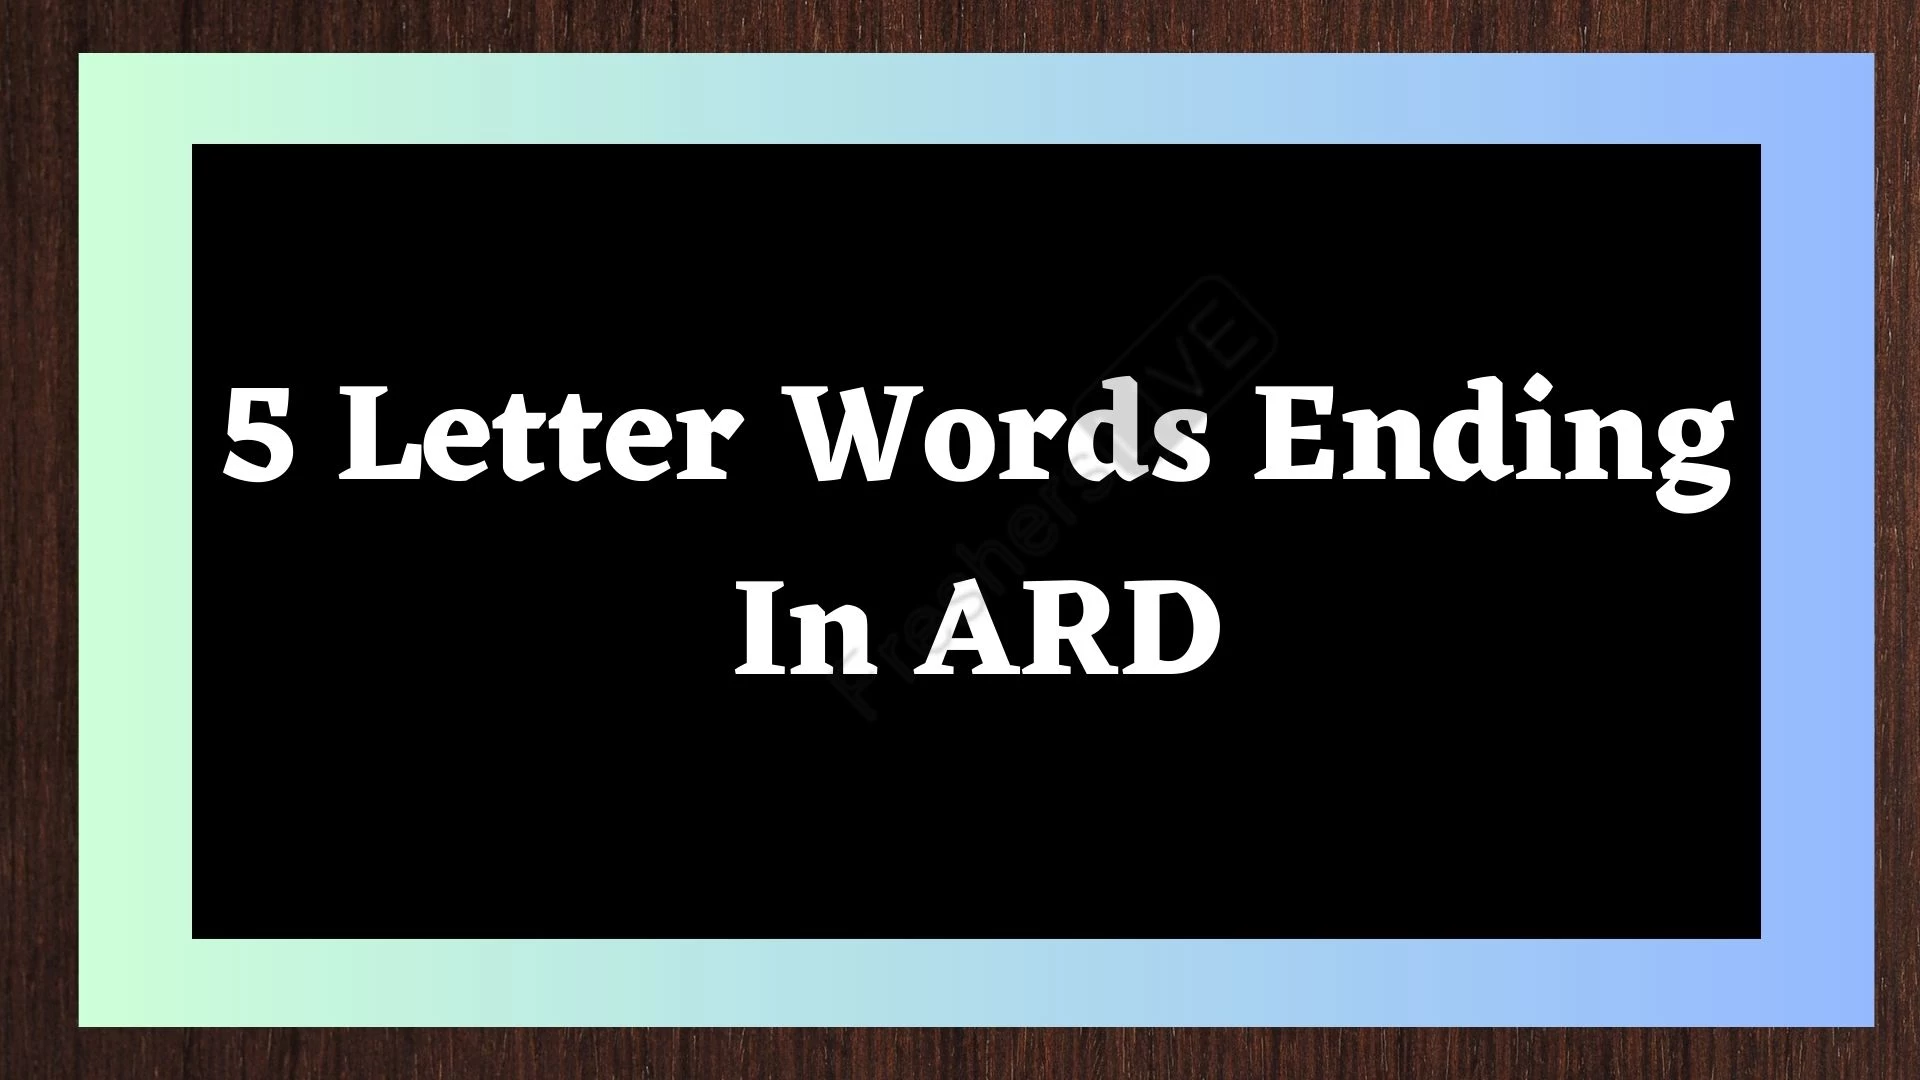 Lista de todas las palabras de 5 letras que terminan en ARD